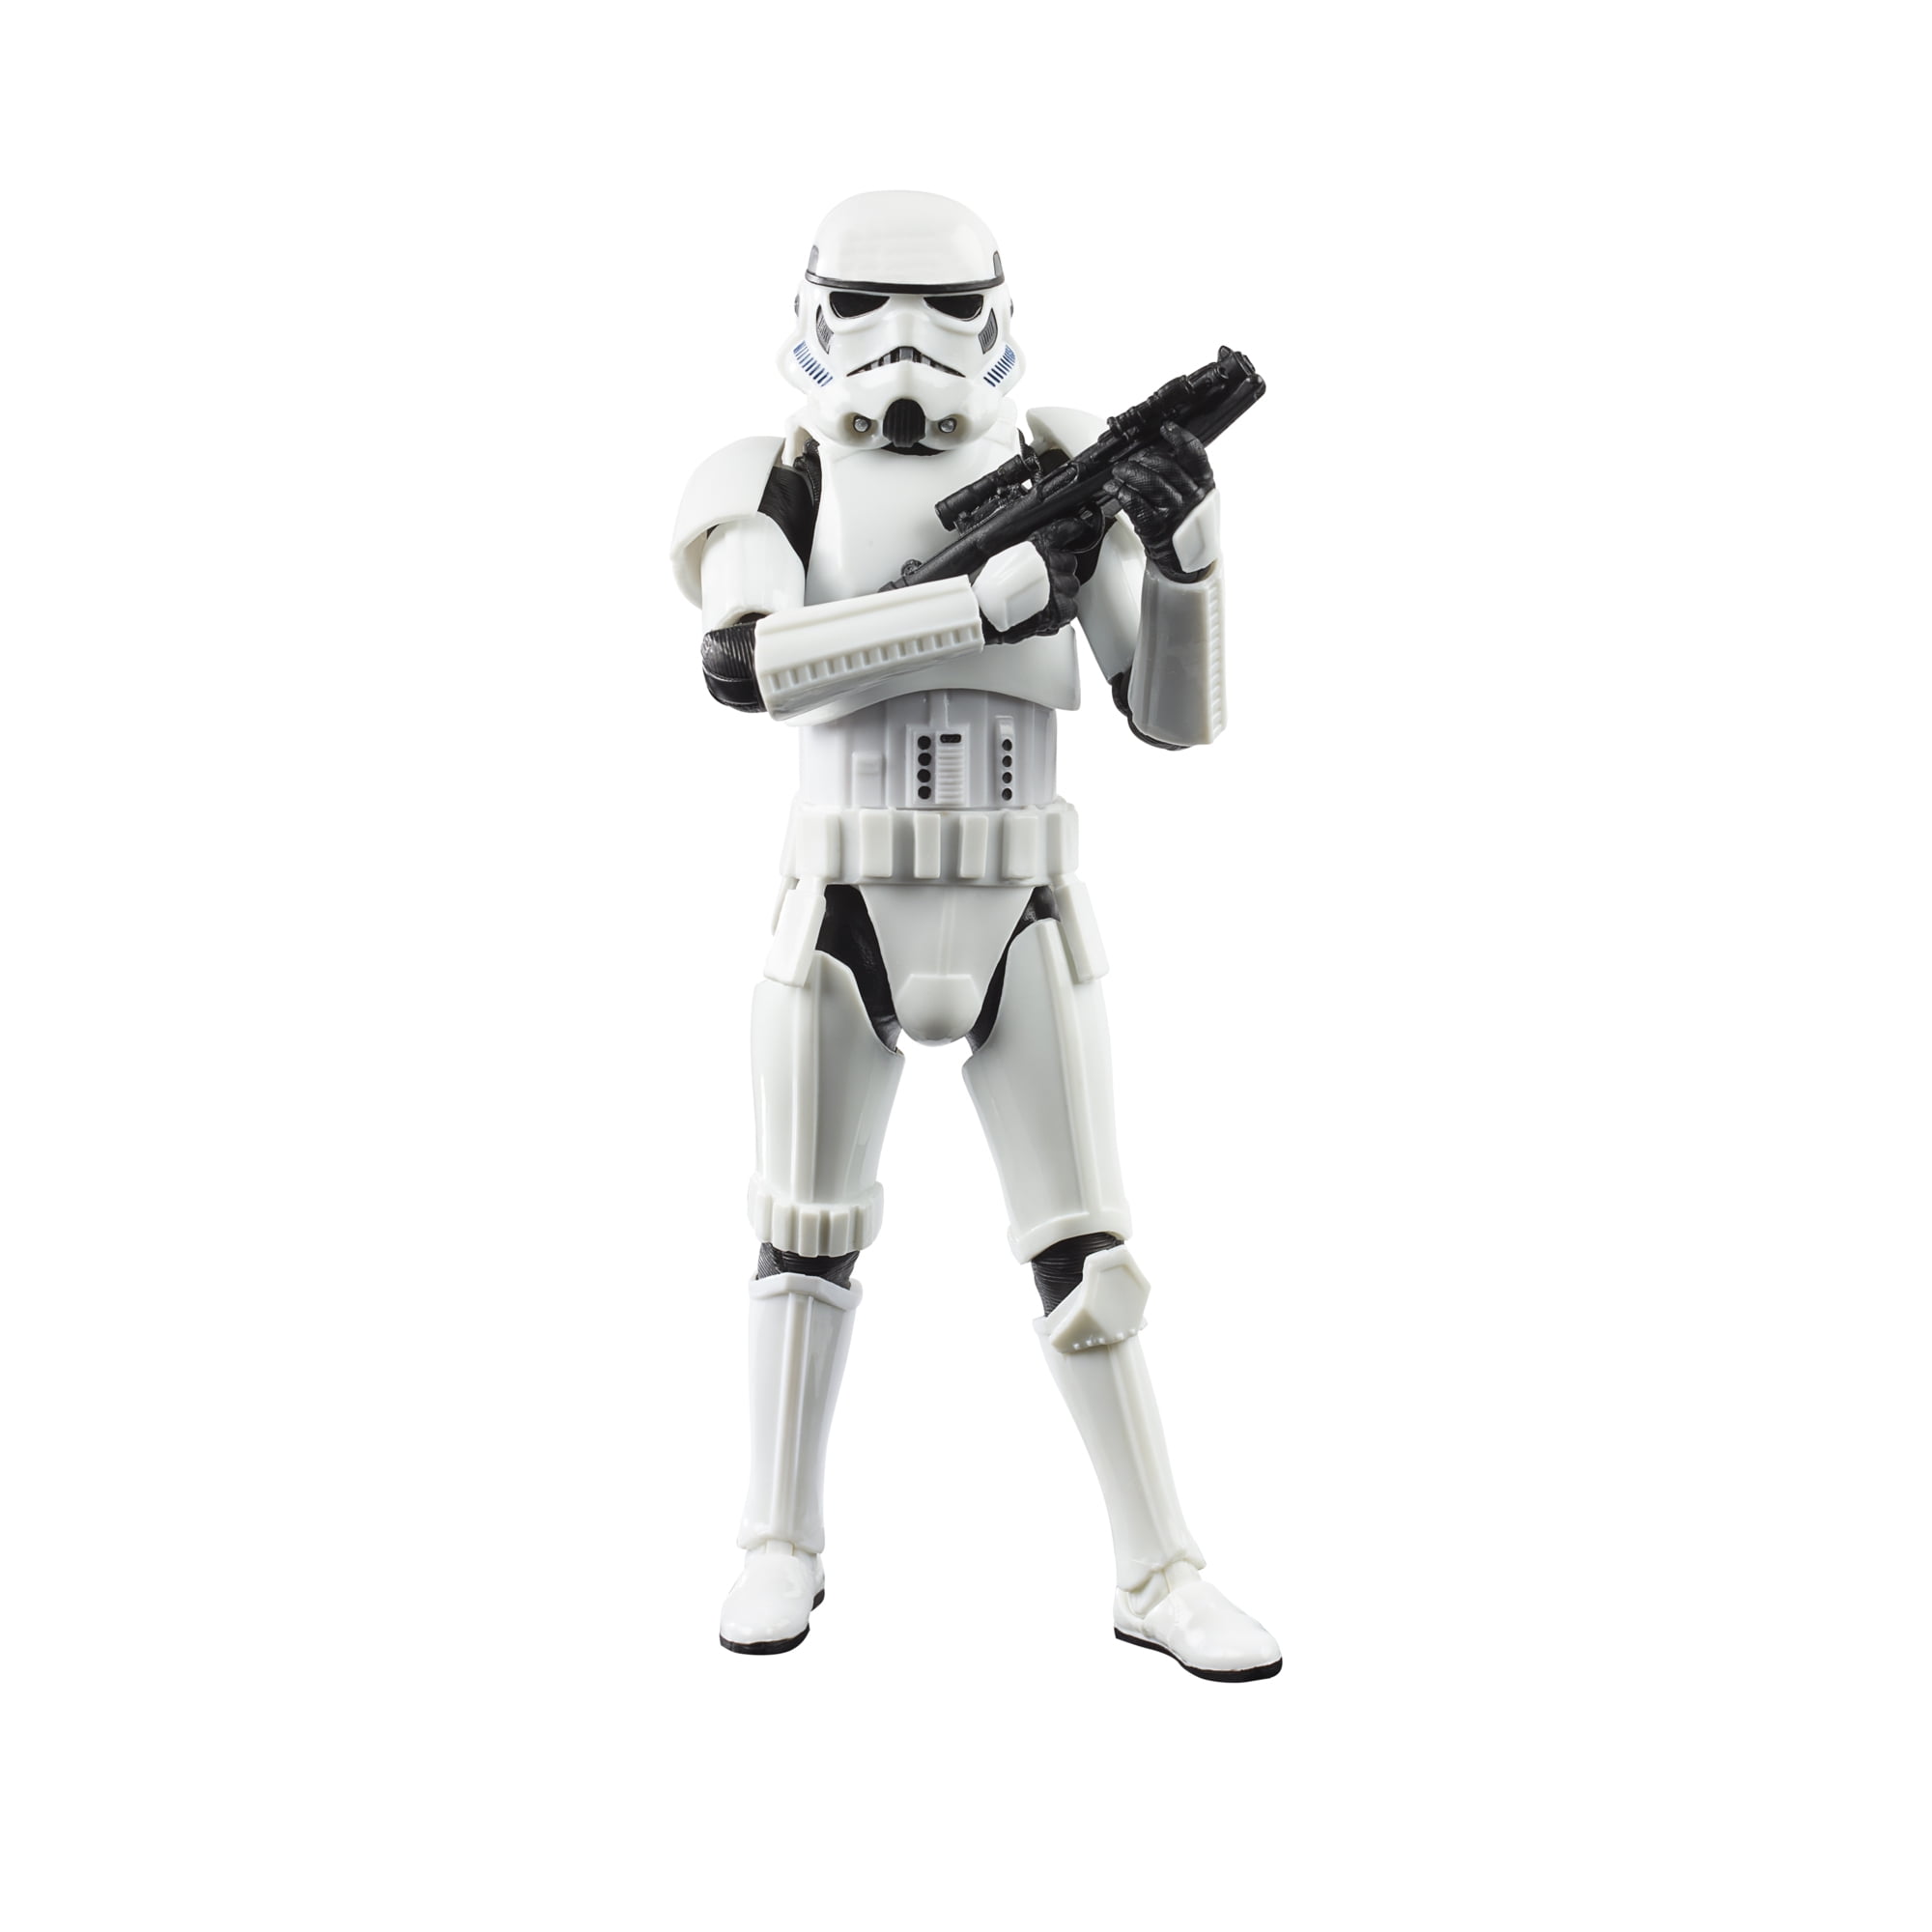 stormtrooper collectible figure